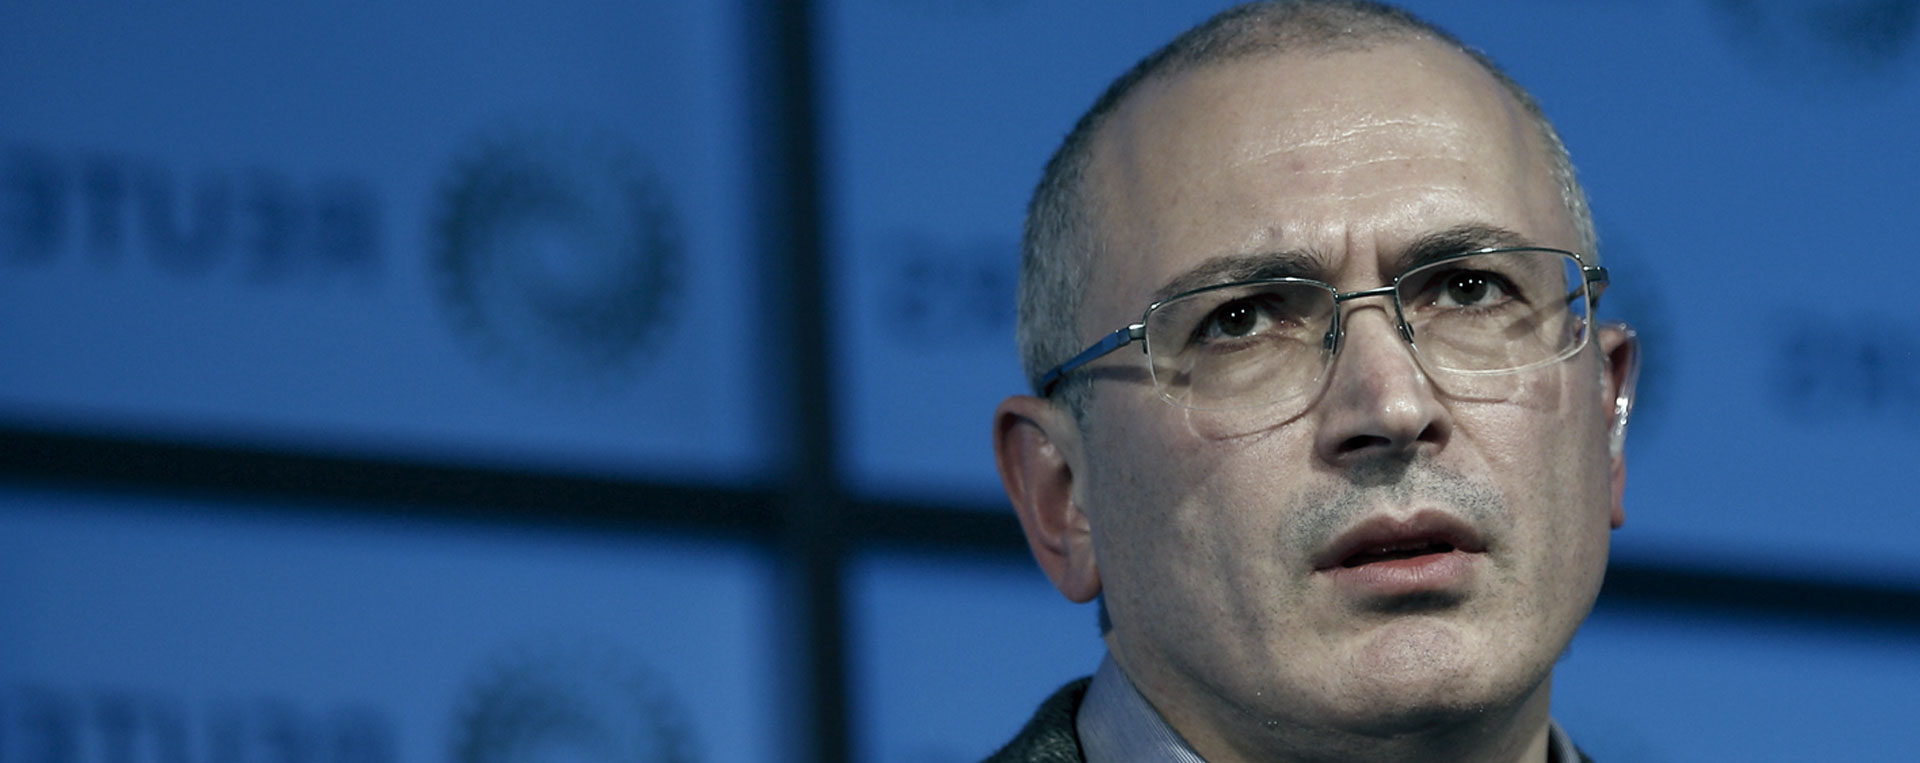 Mikhail Khodorkovsky, Former Russian Oil Tycoon